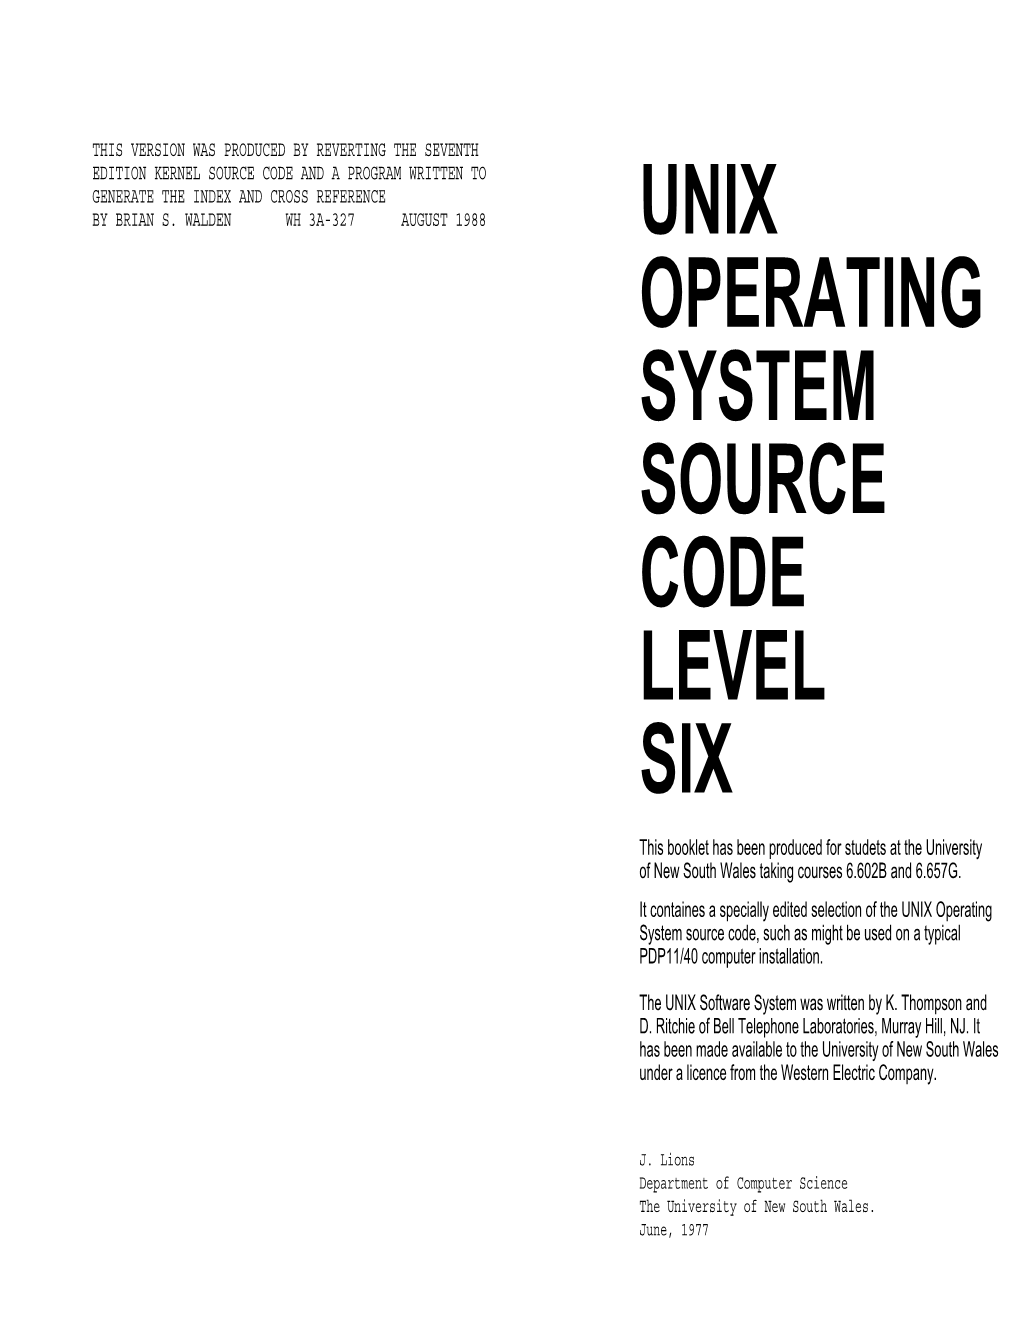 Unix Operating System Source Code Level Six